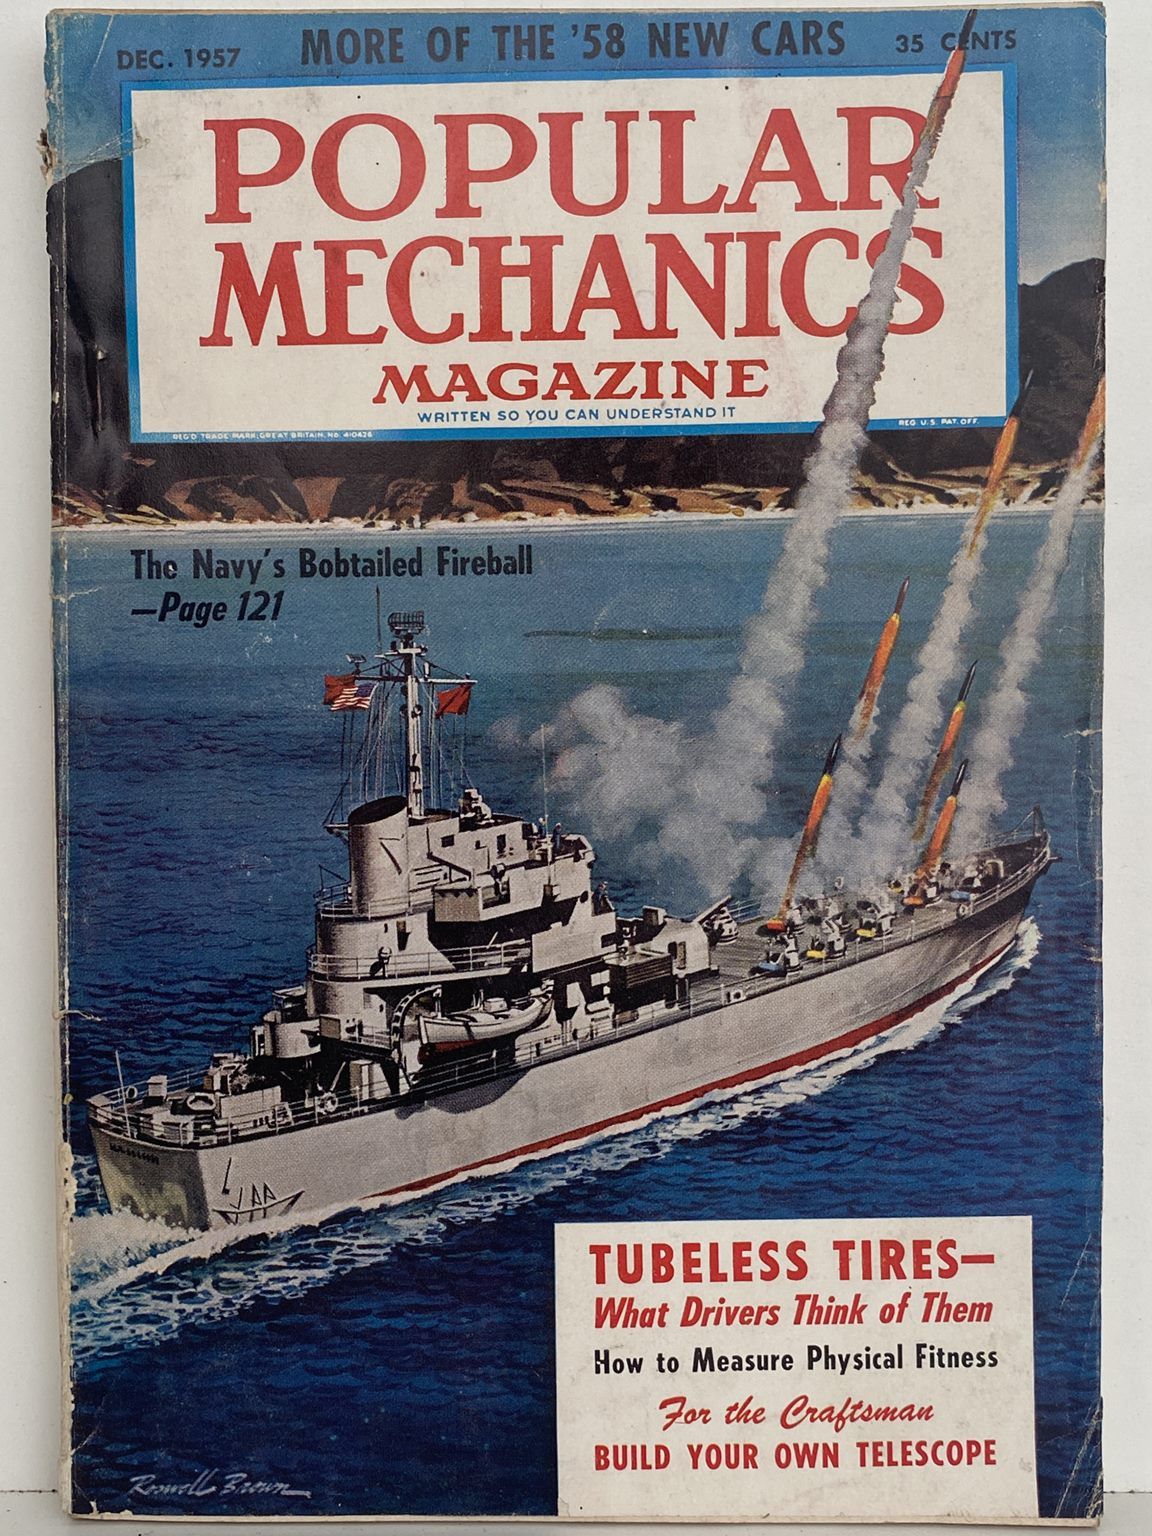 VINTAGE MAGAZINE: Popular Mechanics - Vol. 108, No. 6 - December 1957